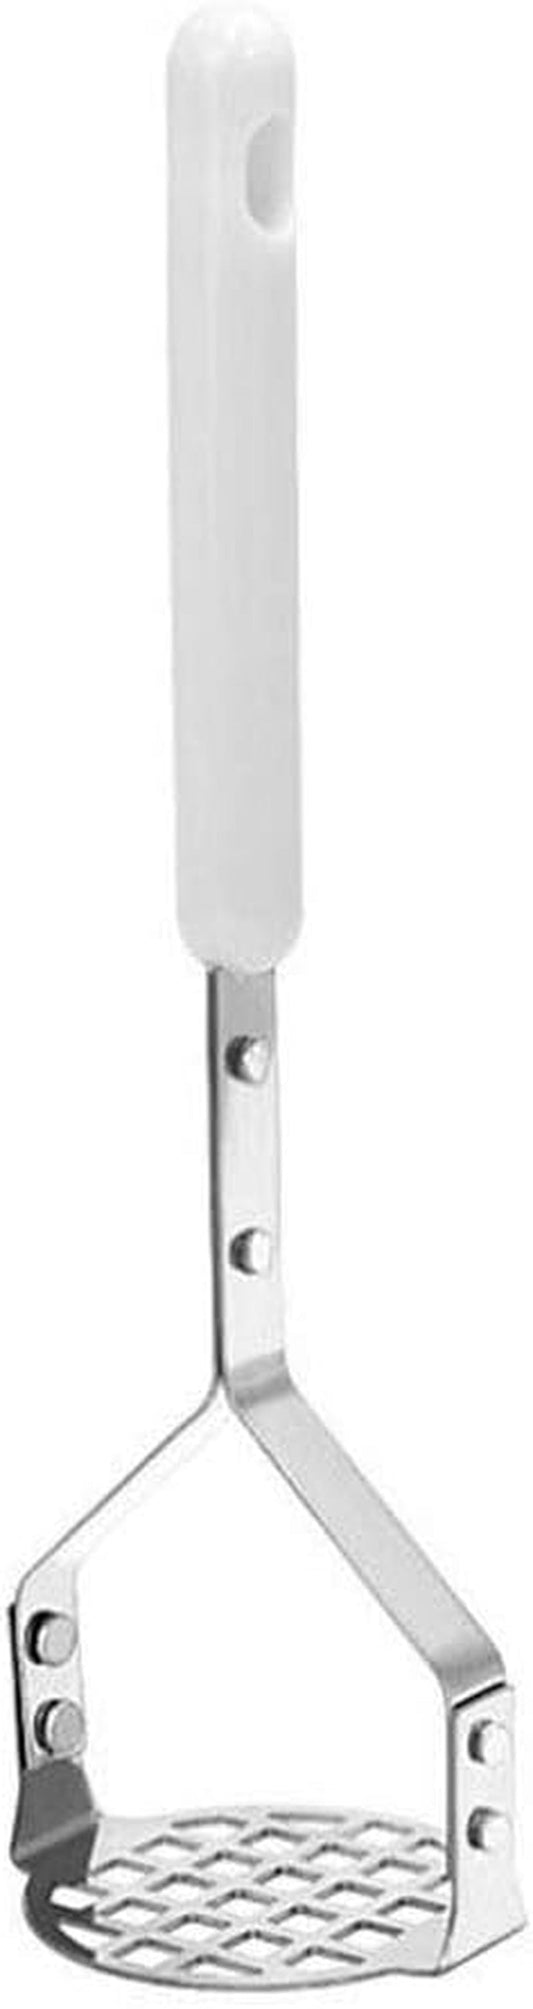 1PCS Kitchen Gadgets/Mini Potato Puddler/Stainless Steel Household Manual Potato Puddler